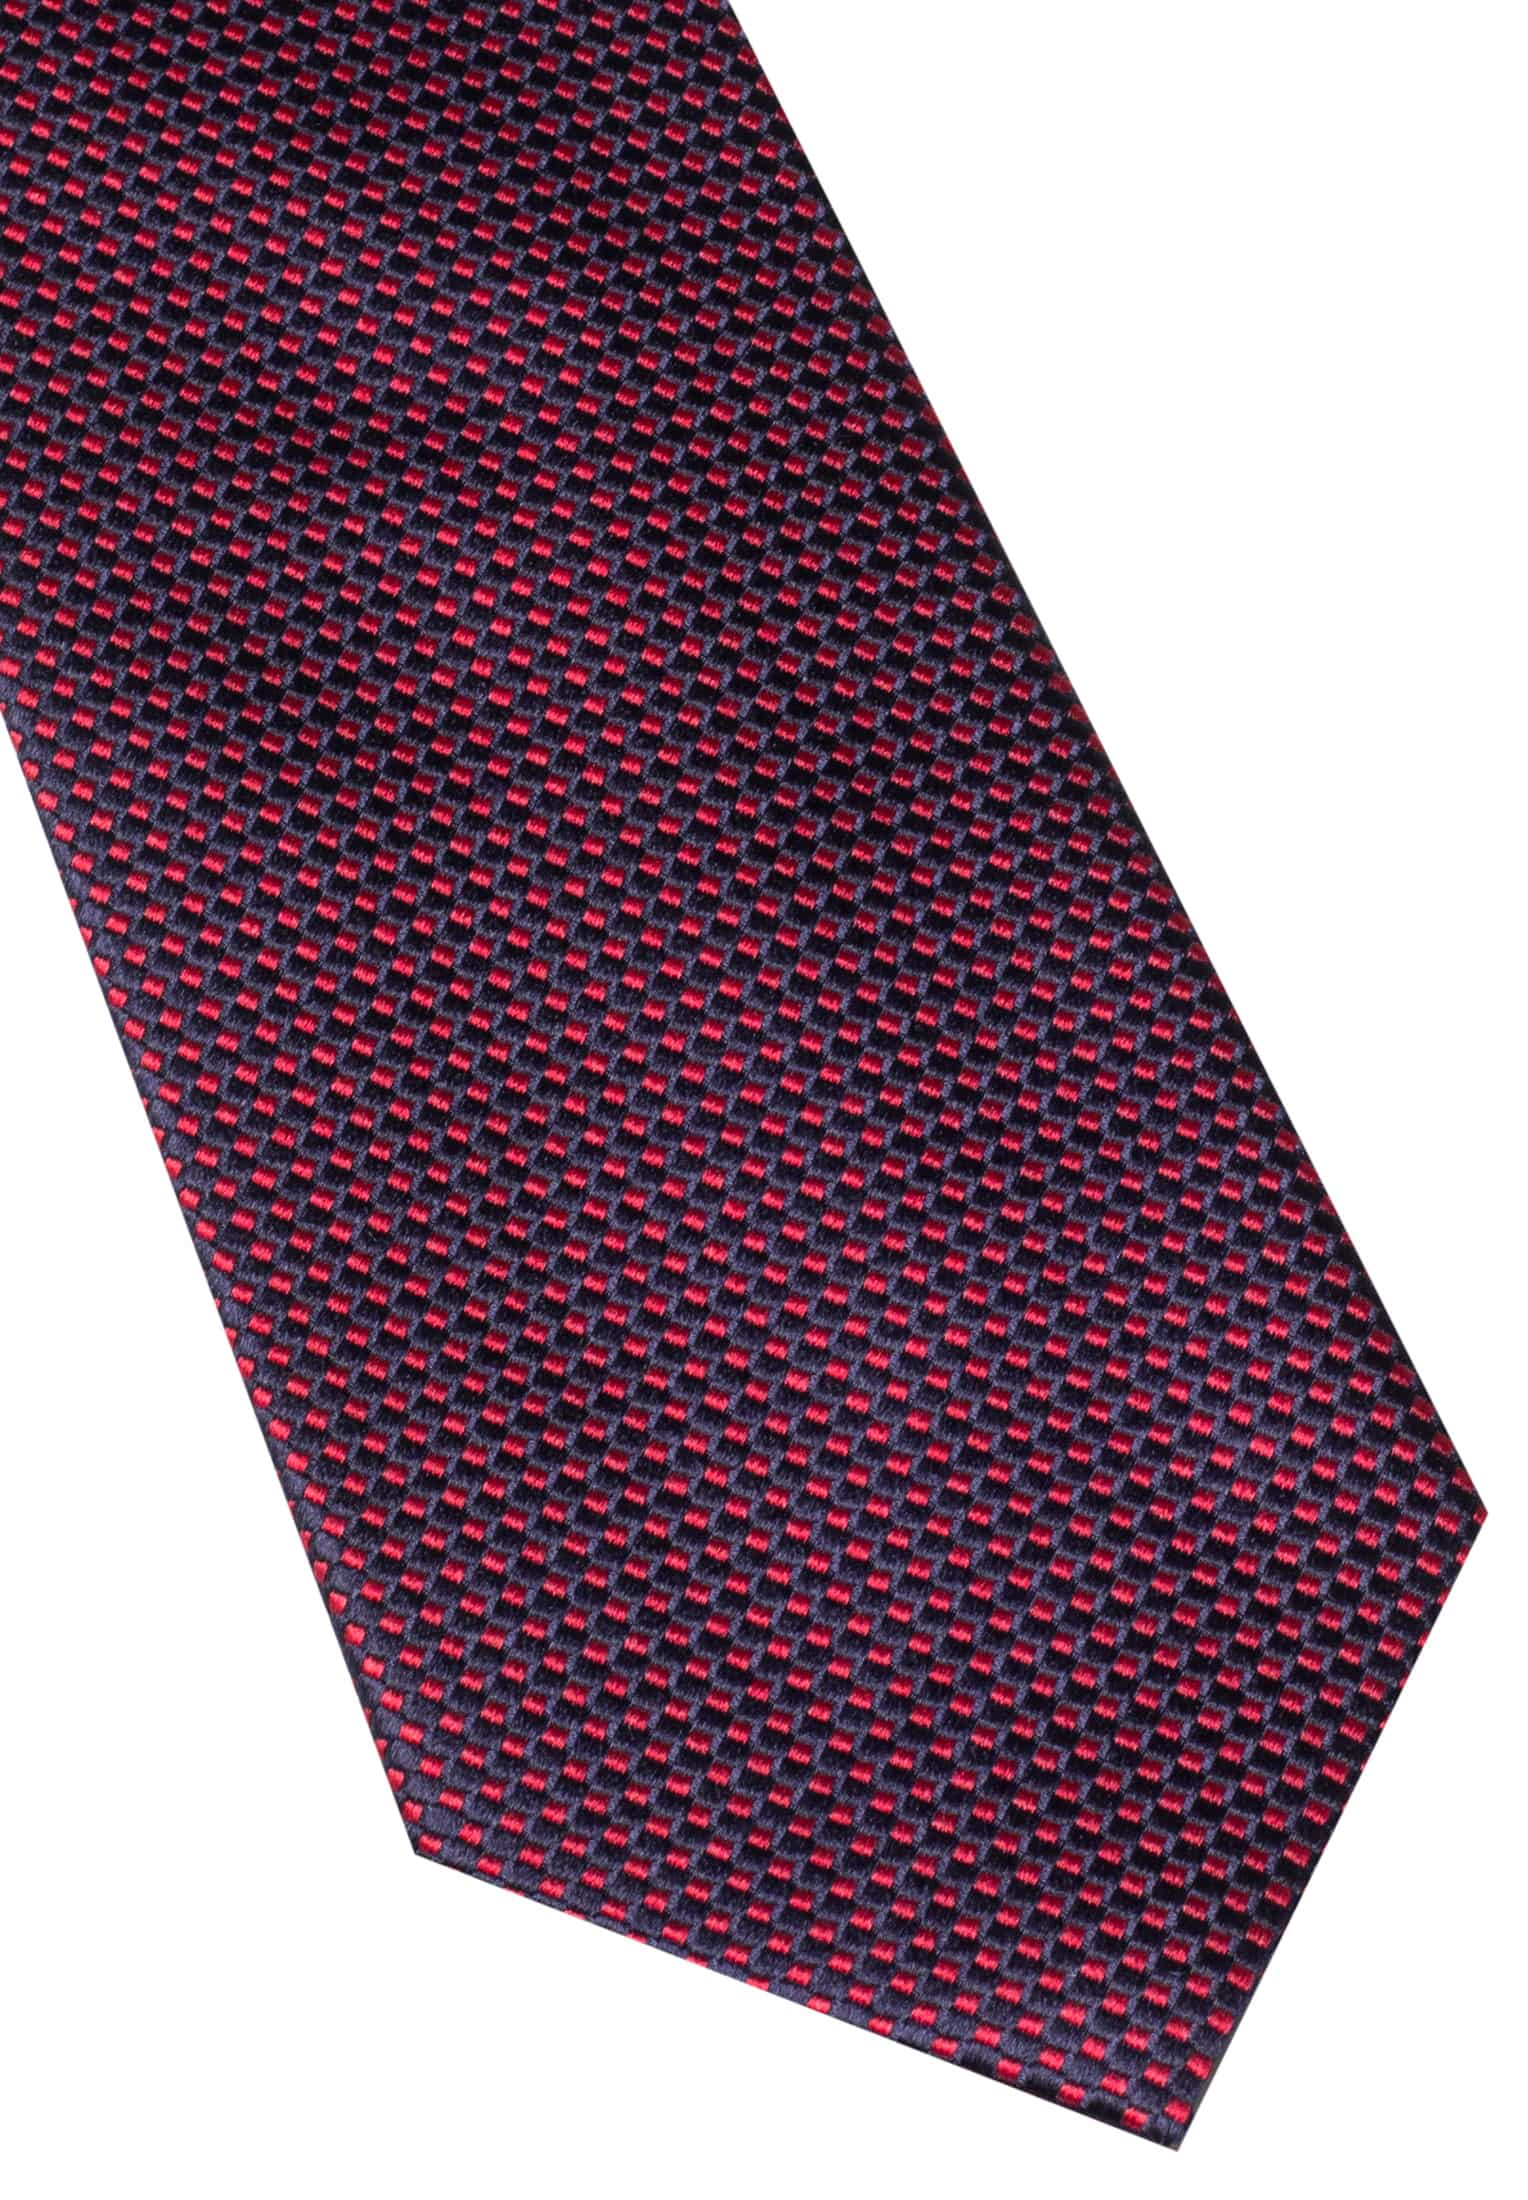 Krawatte in navy/rot | | strukturiert 1AC00534-81-89-142 142 navy/rot 